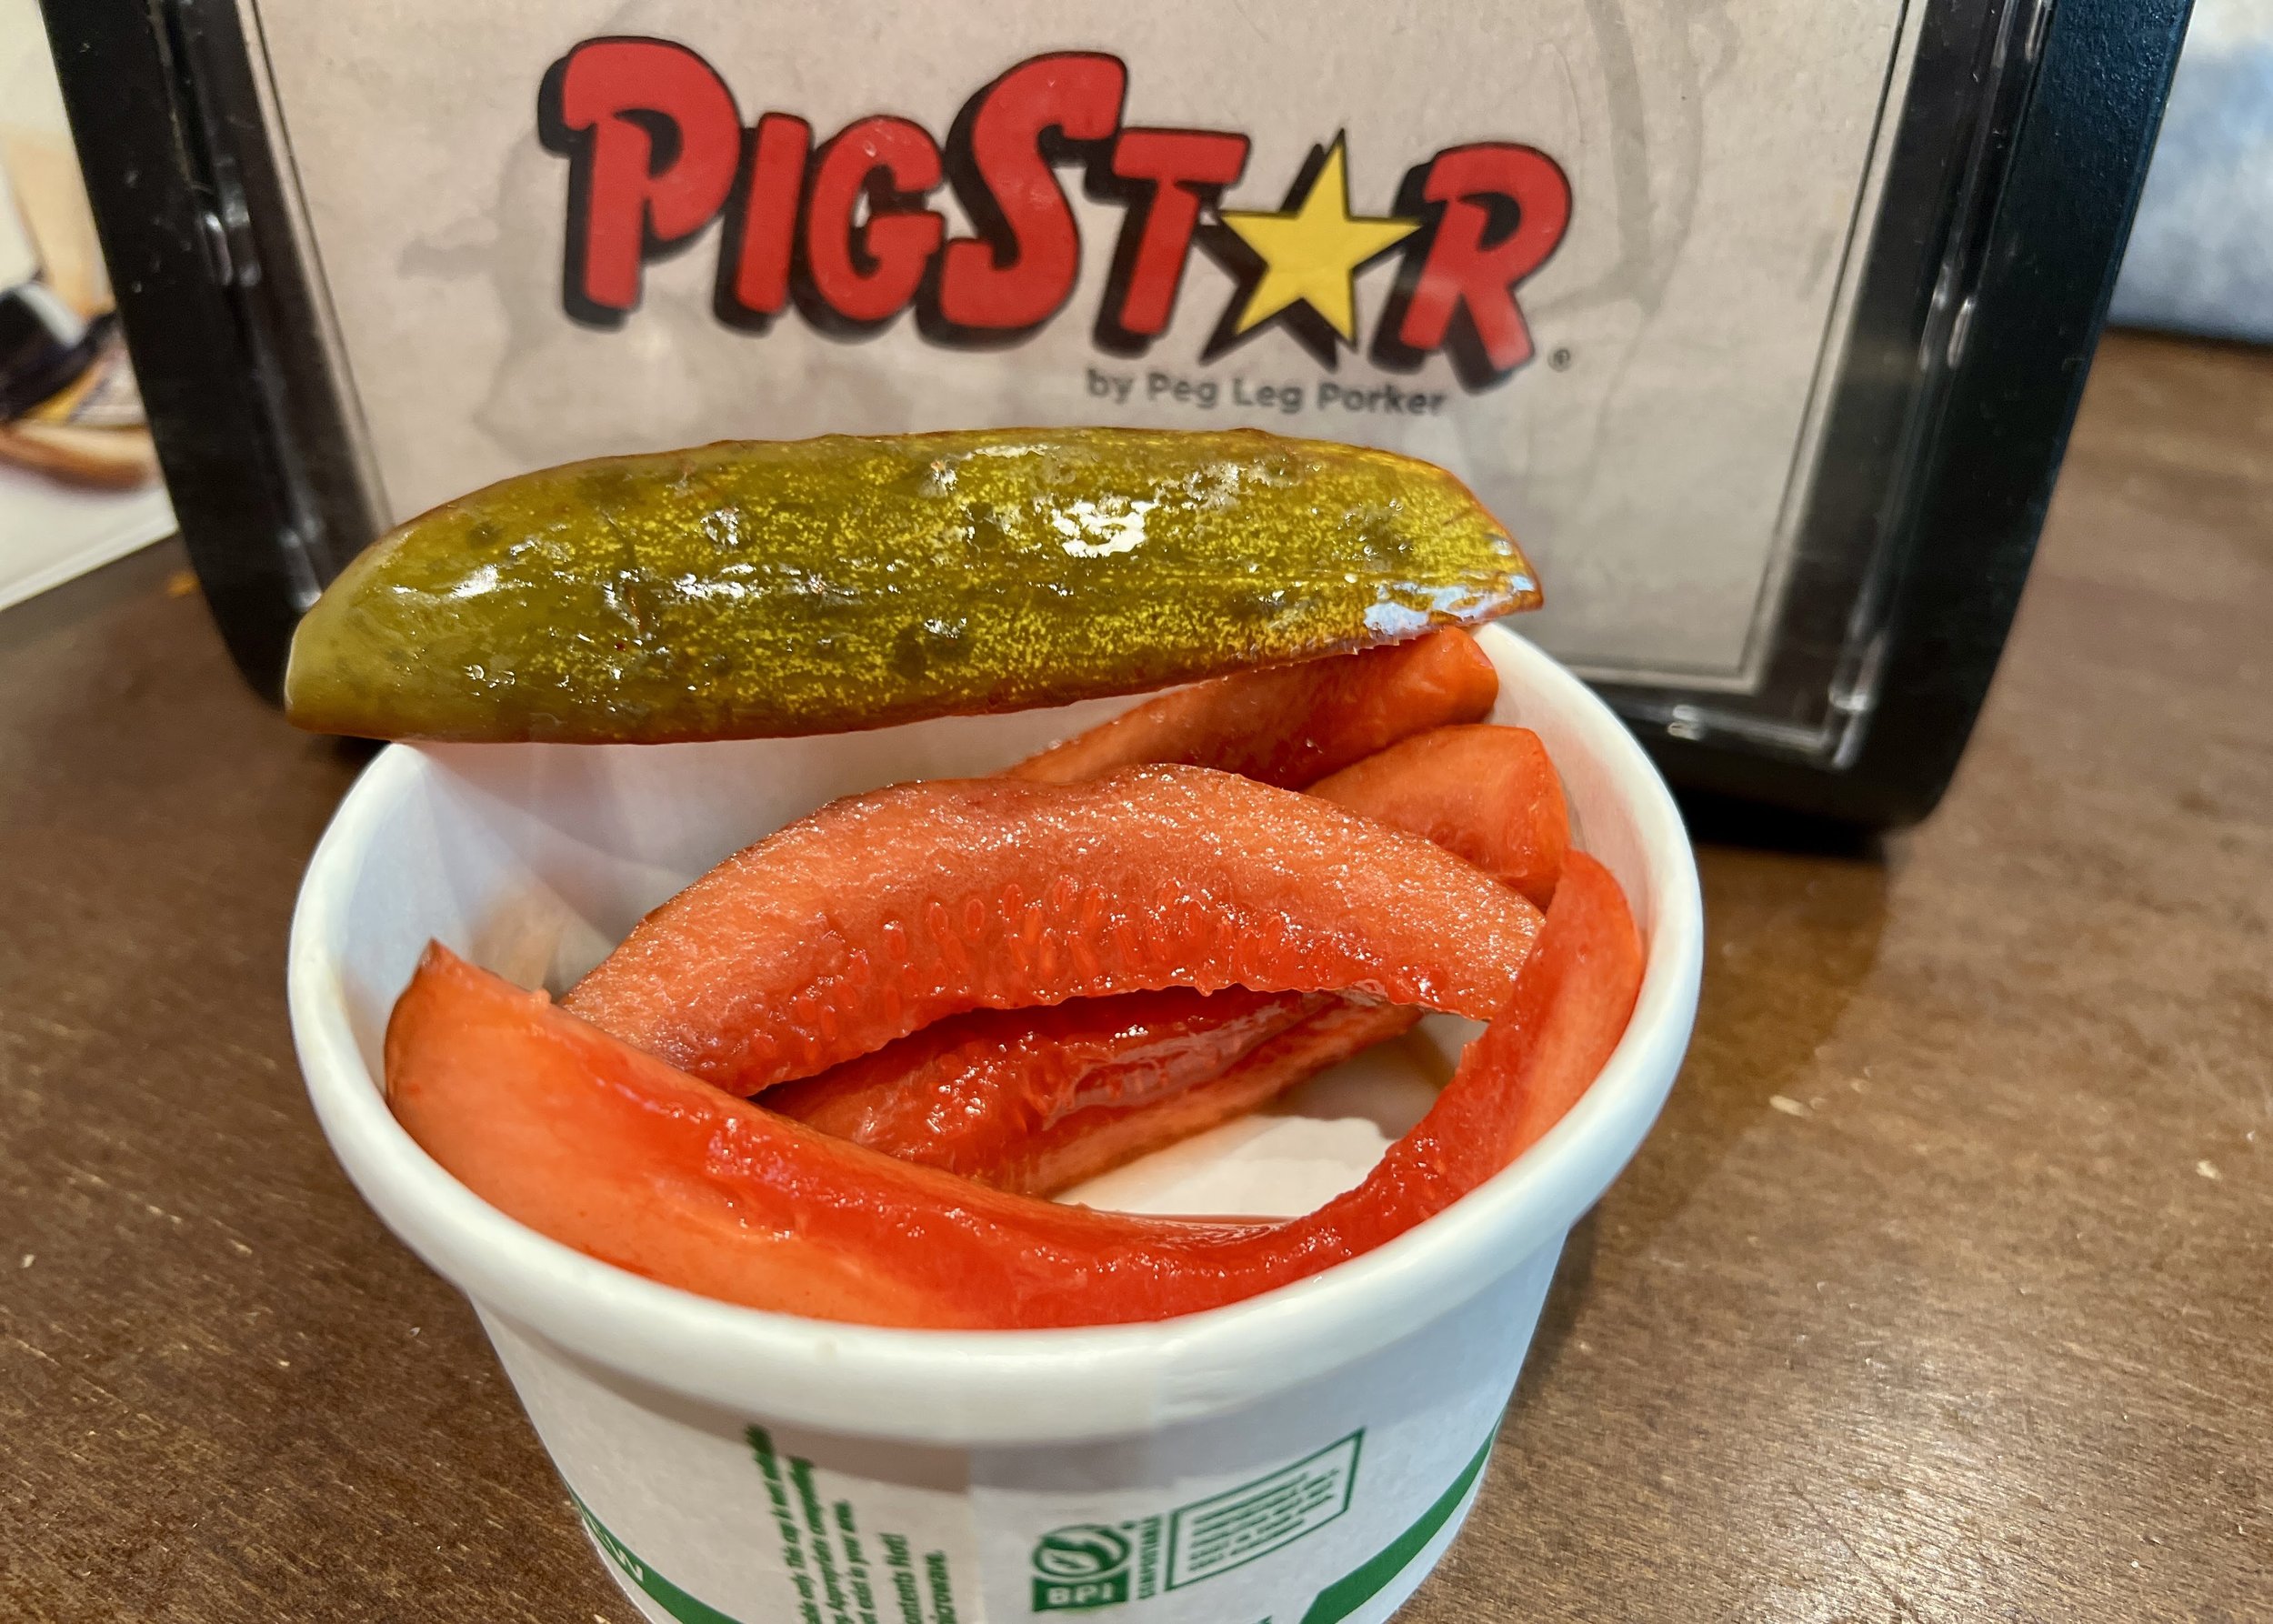 Kool-Aid pickles at Pig Star by Peg Leg Porker in Nashville International Airport CREDIT Jennifer Bain.jpg